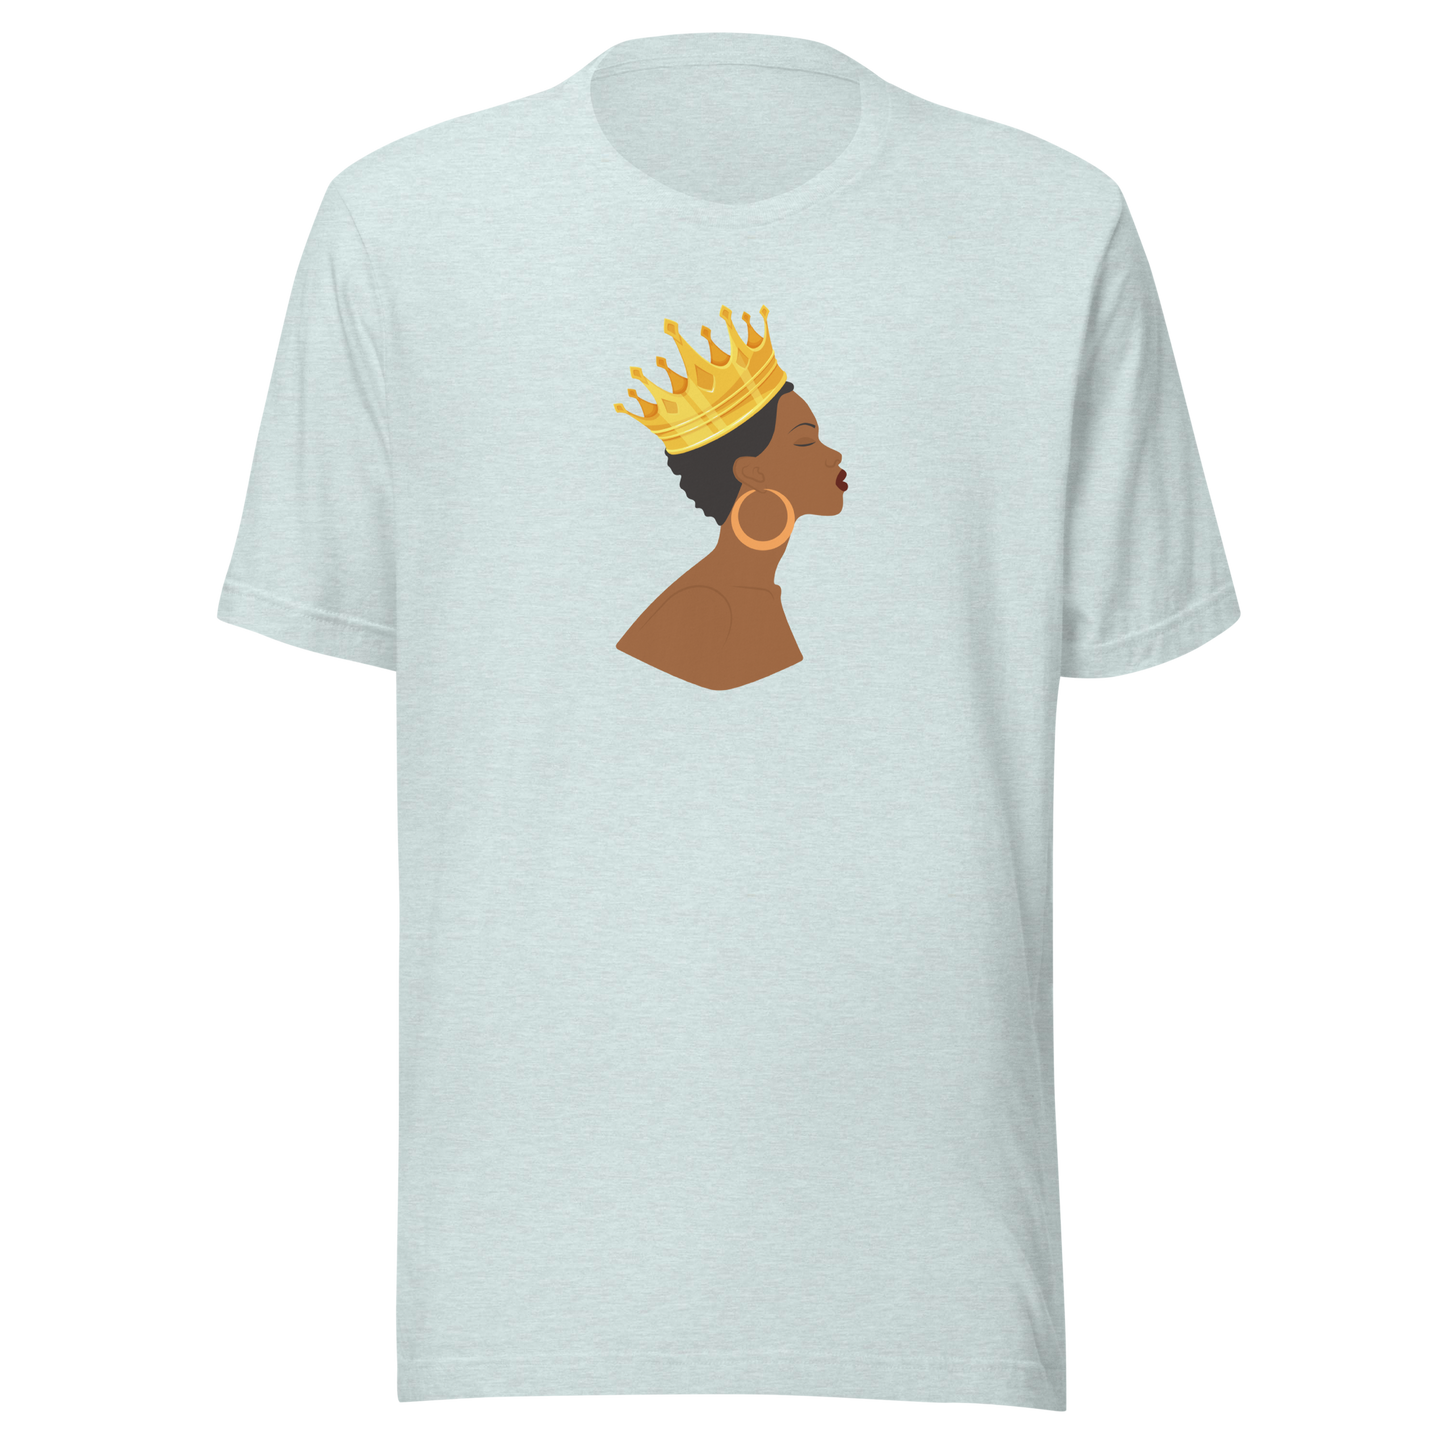 Queen Mentality “Crown Me” Tee